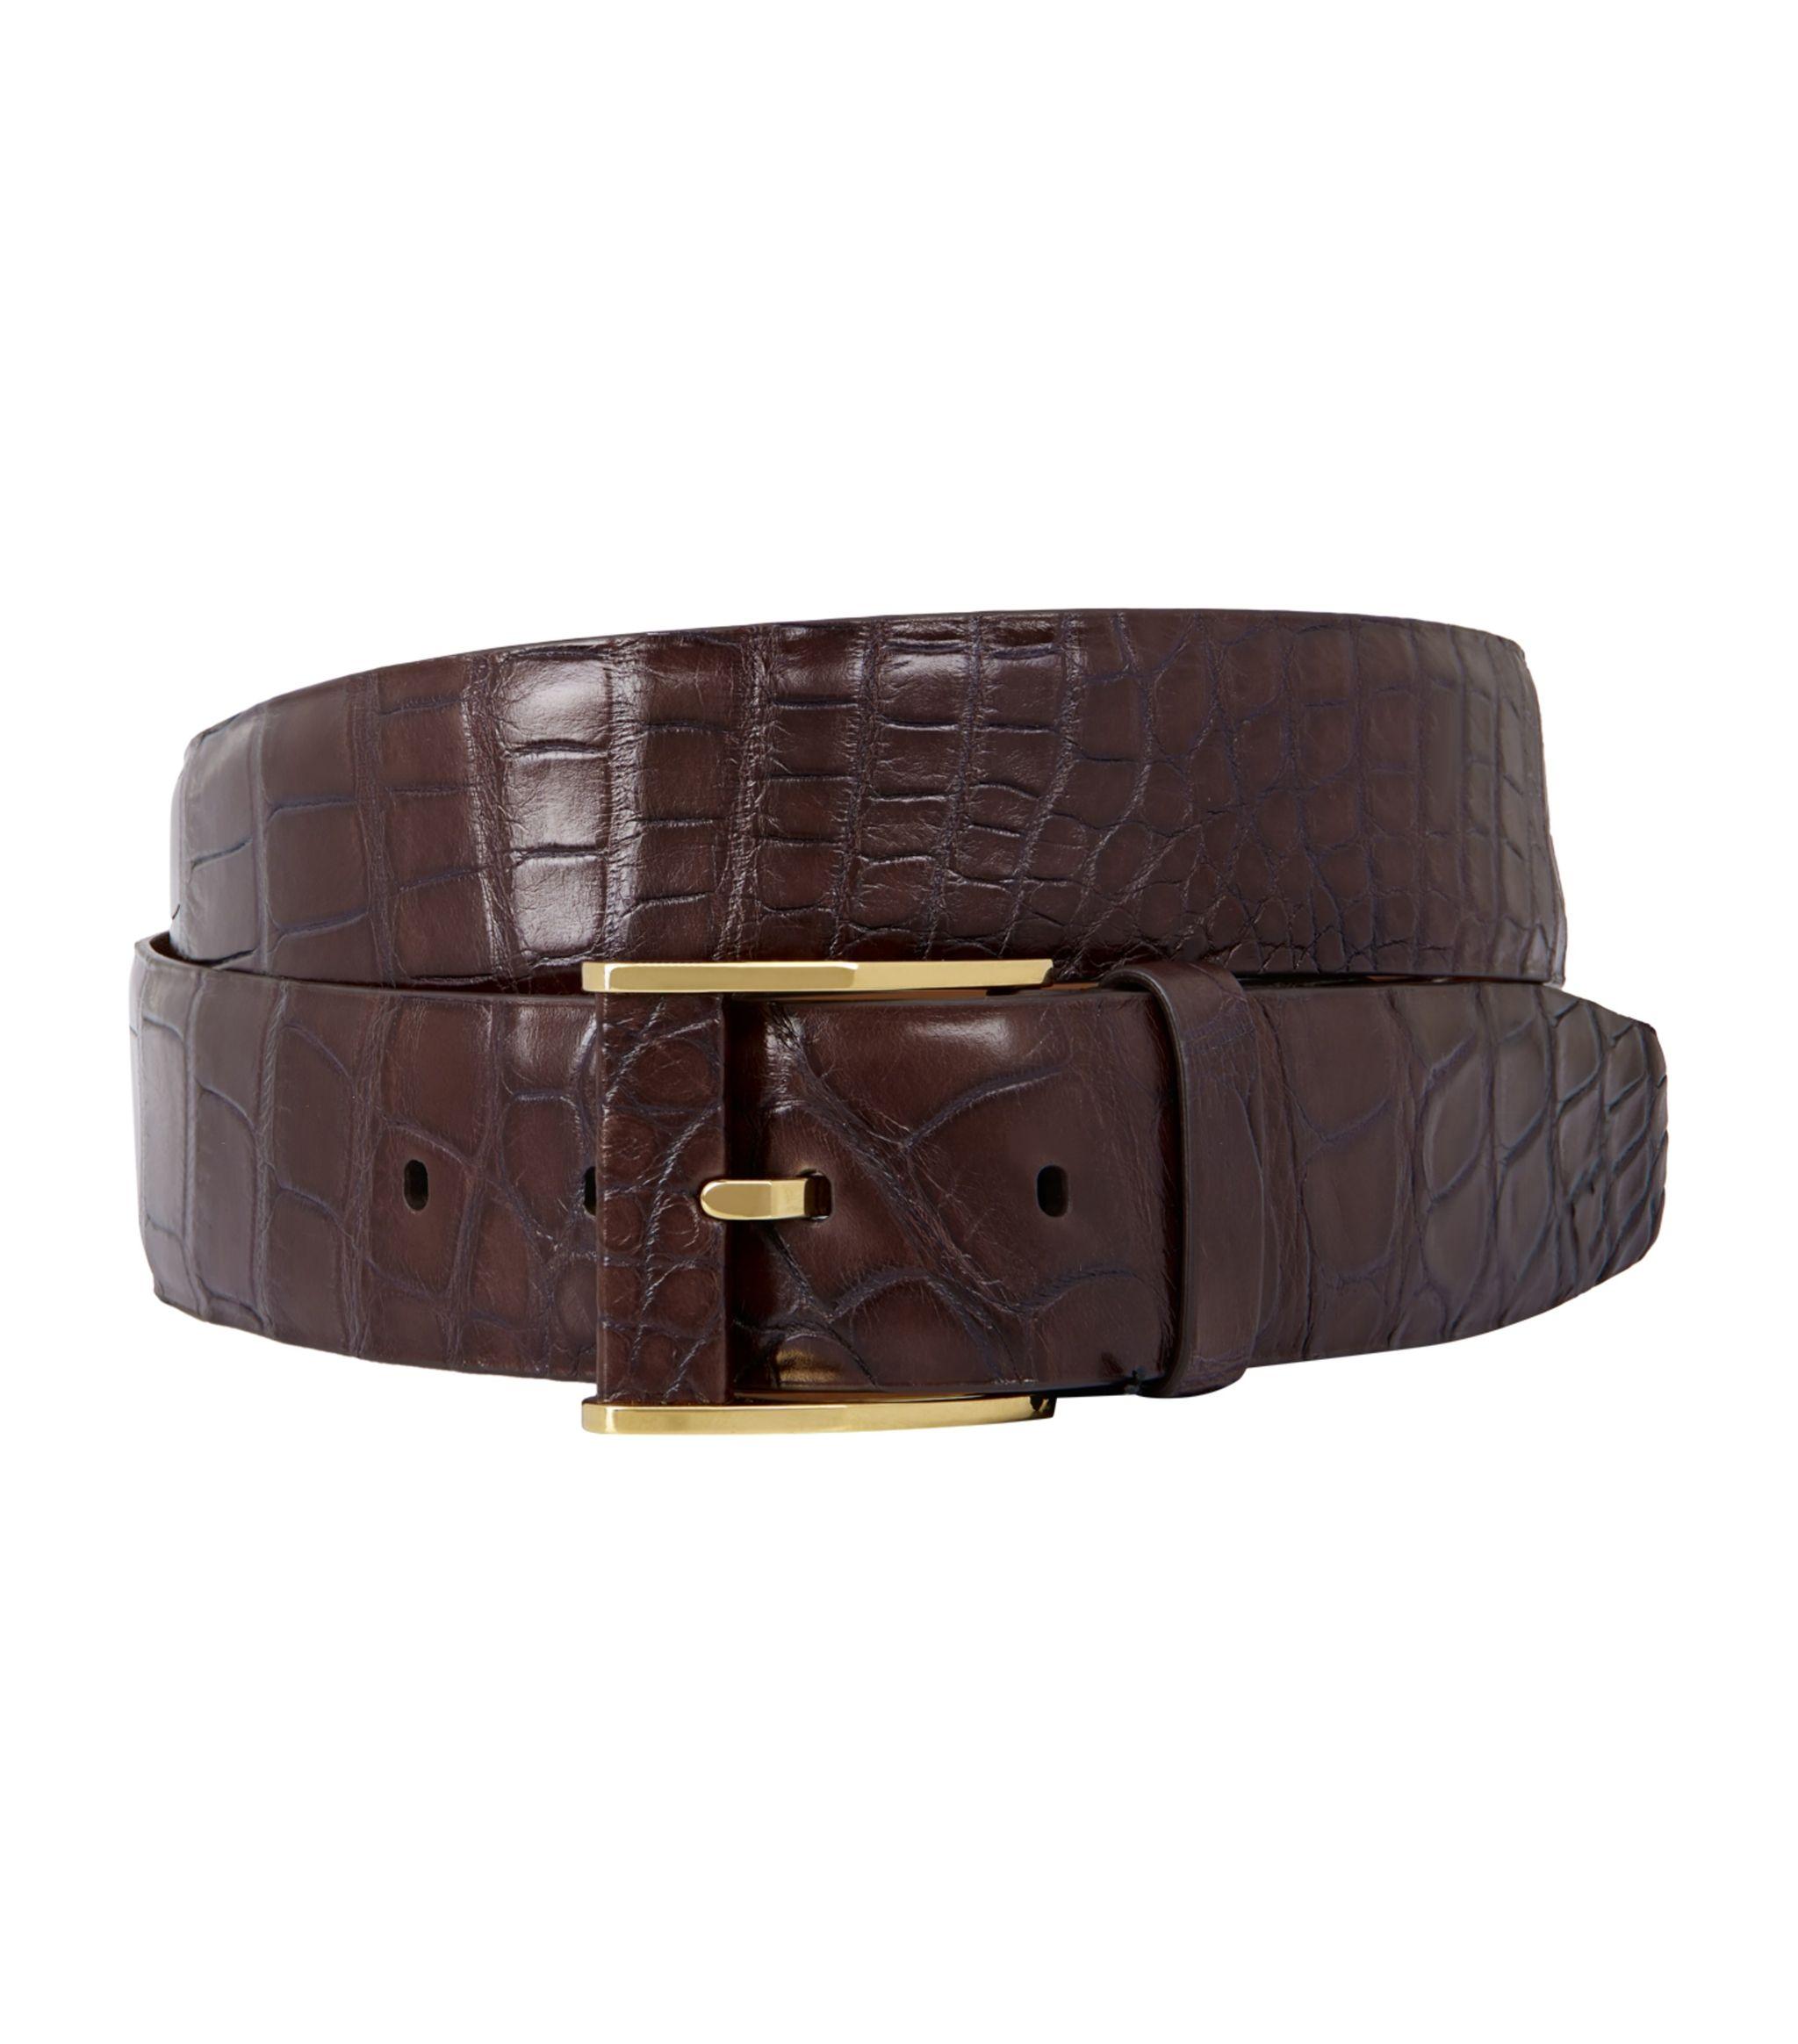 Zilli Leather Crocodile Belt in Brown for Men - Lyst